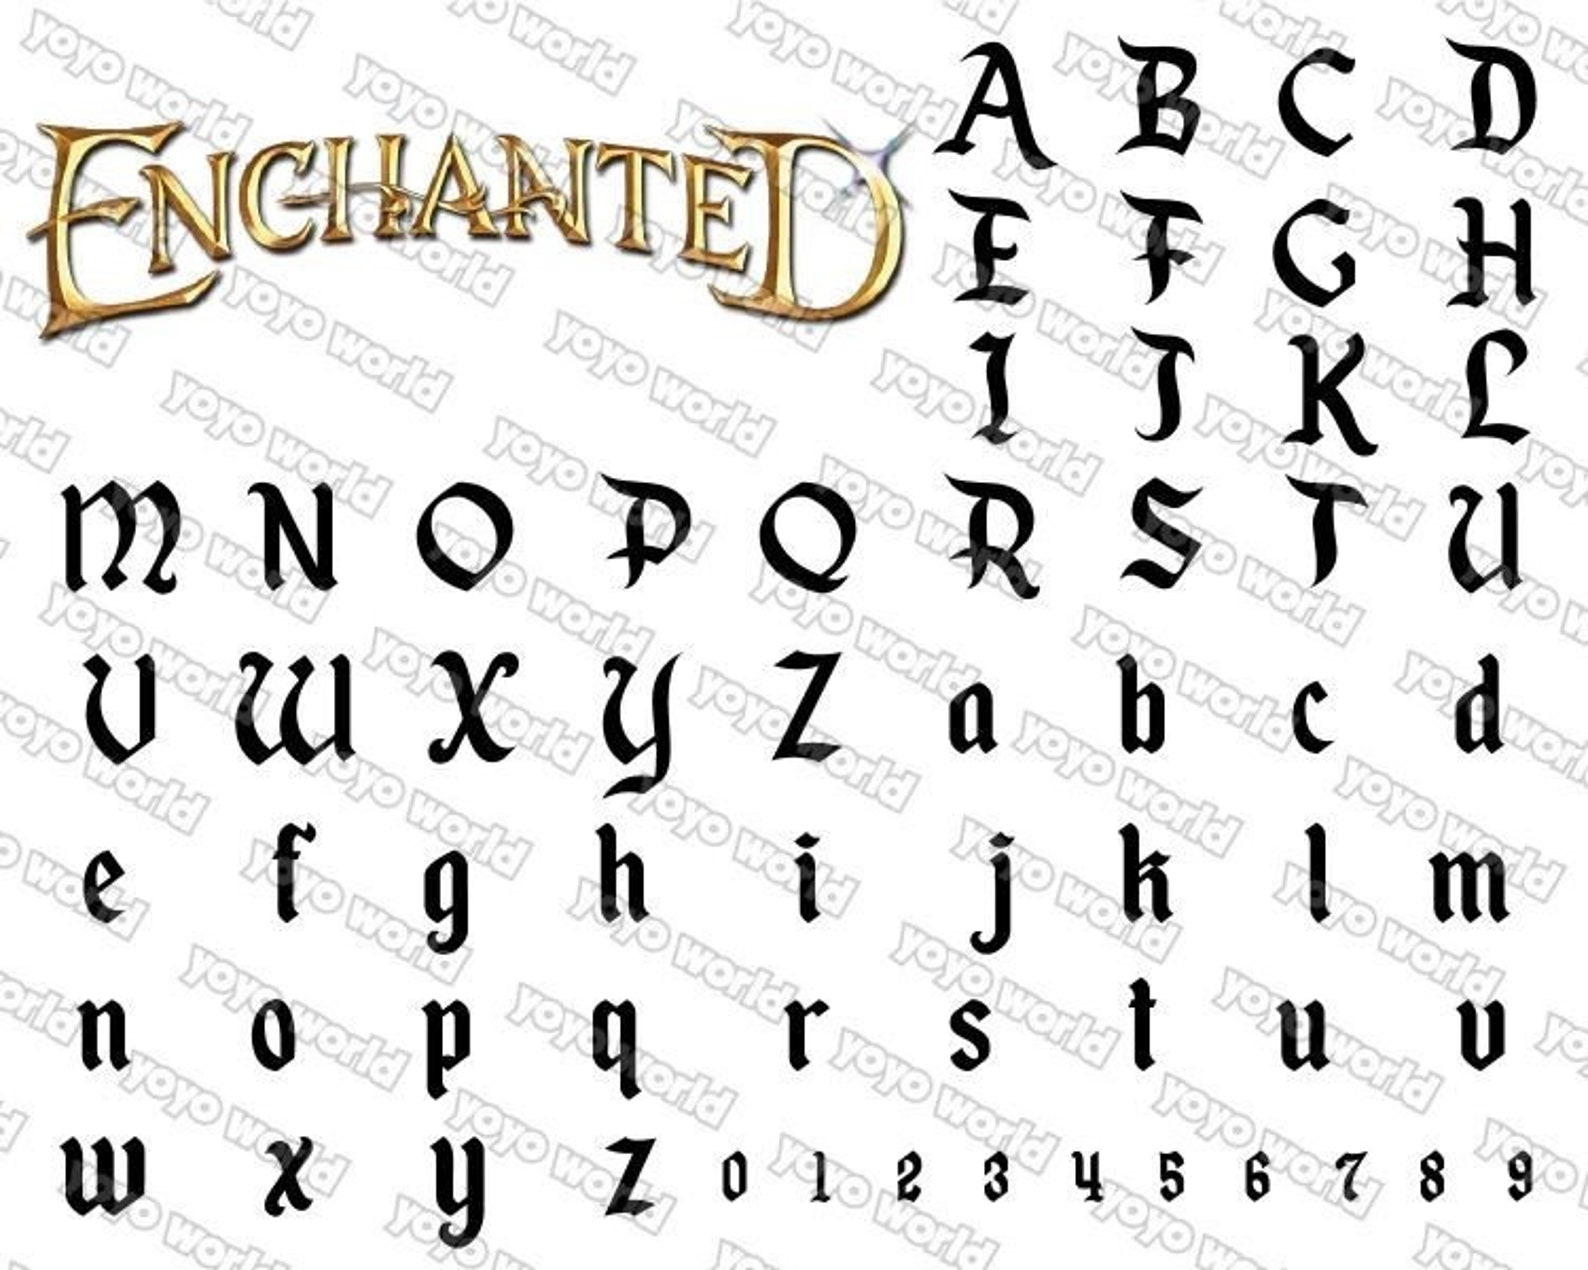 Enchanted Font Enchanted Svg Enchanted Font Svg Enchanted Font